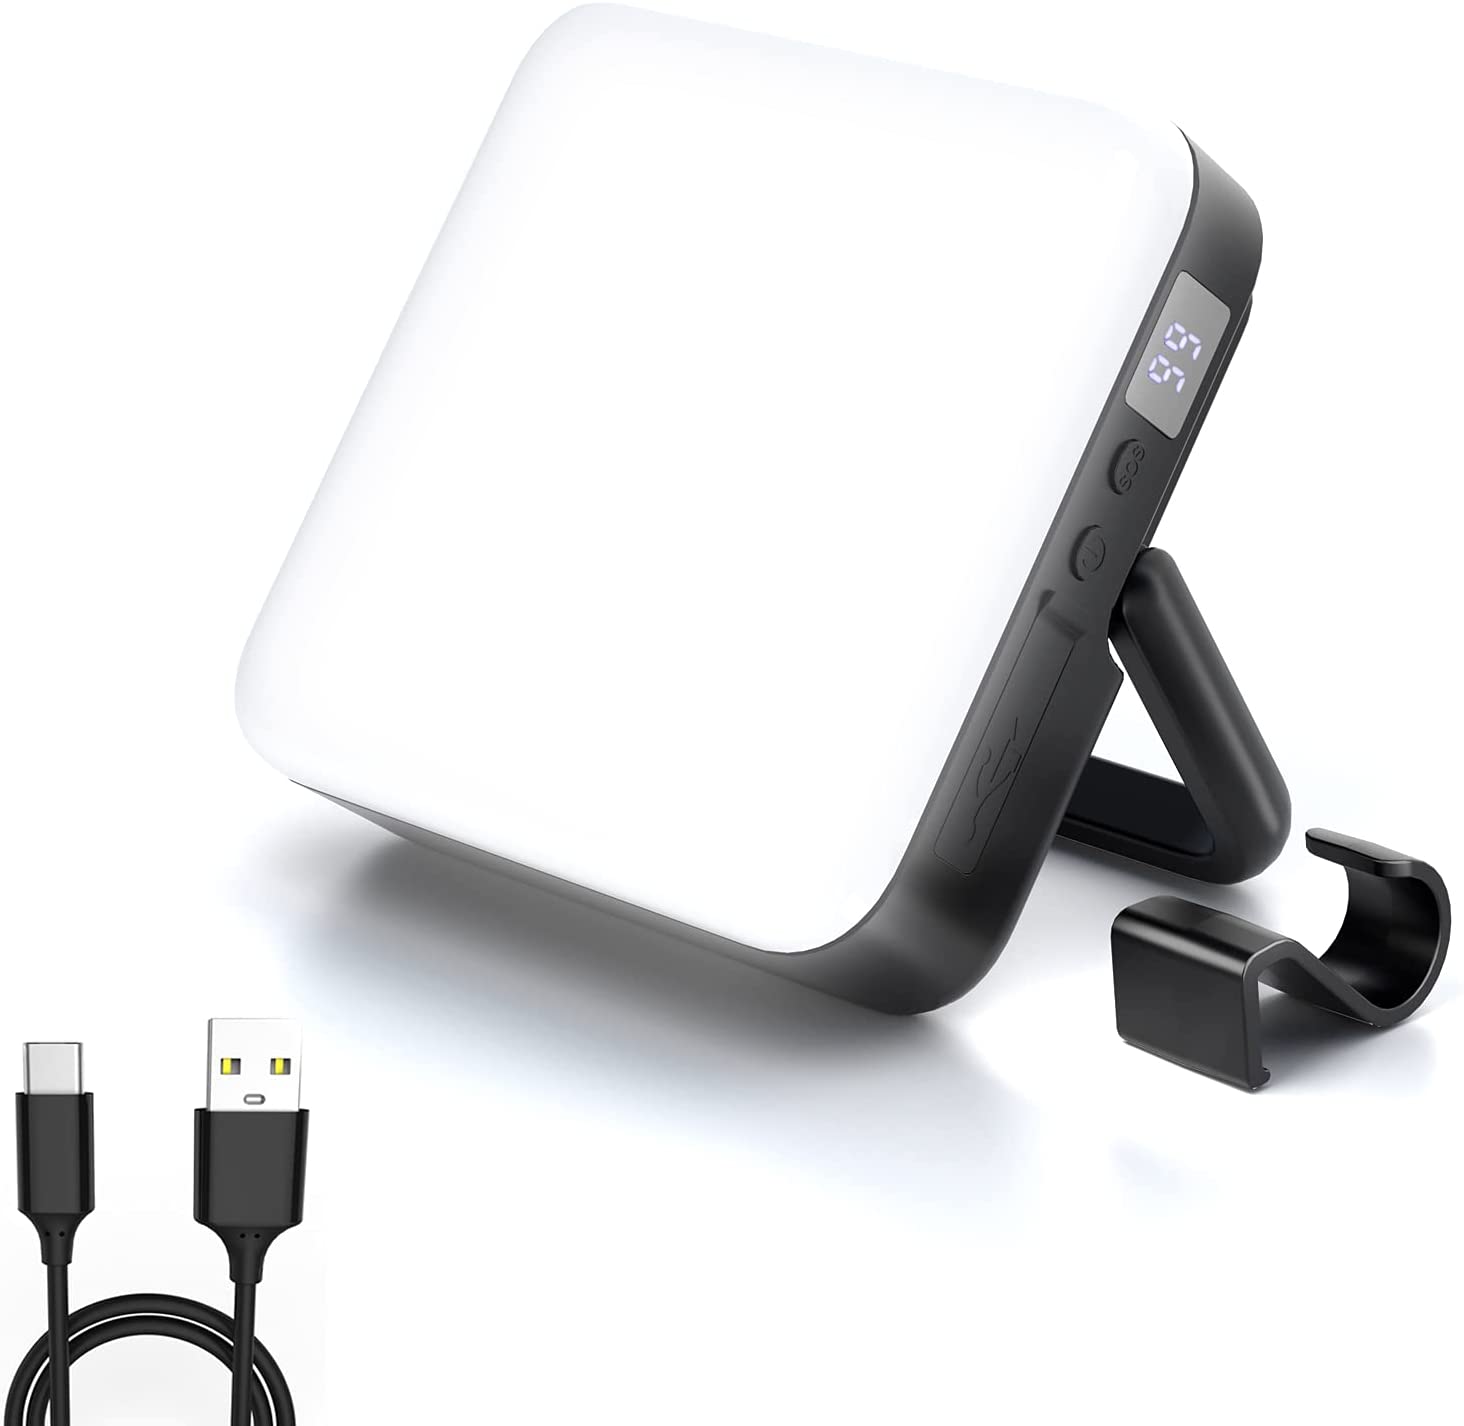 USB Rechargeable Camping Lantern 3000 Lumen - Hokolite Black / 2 Pack